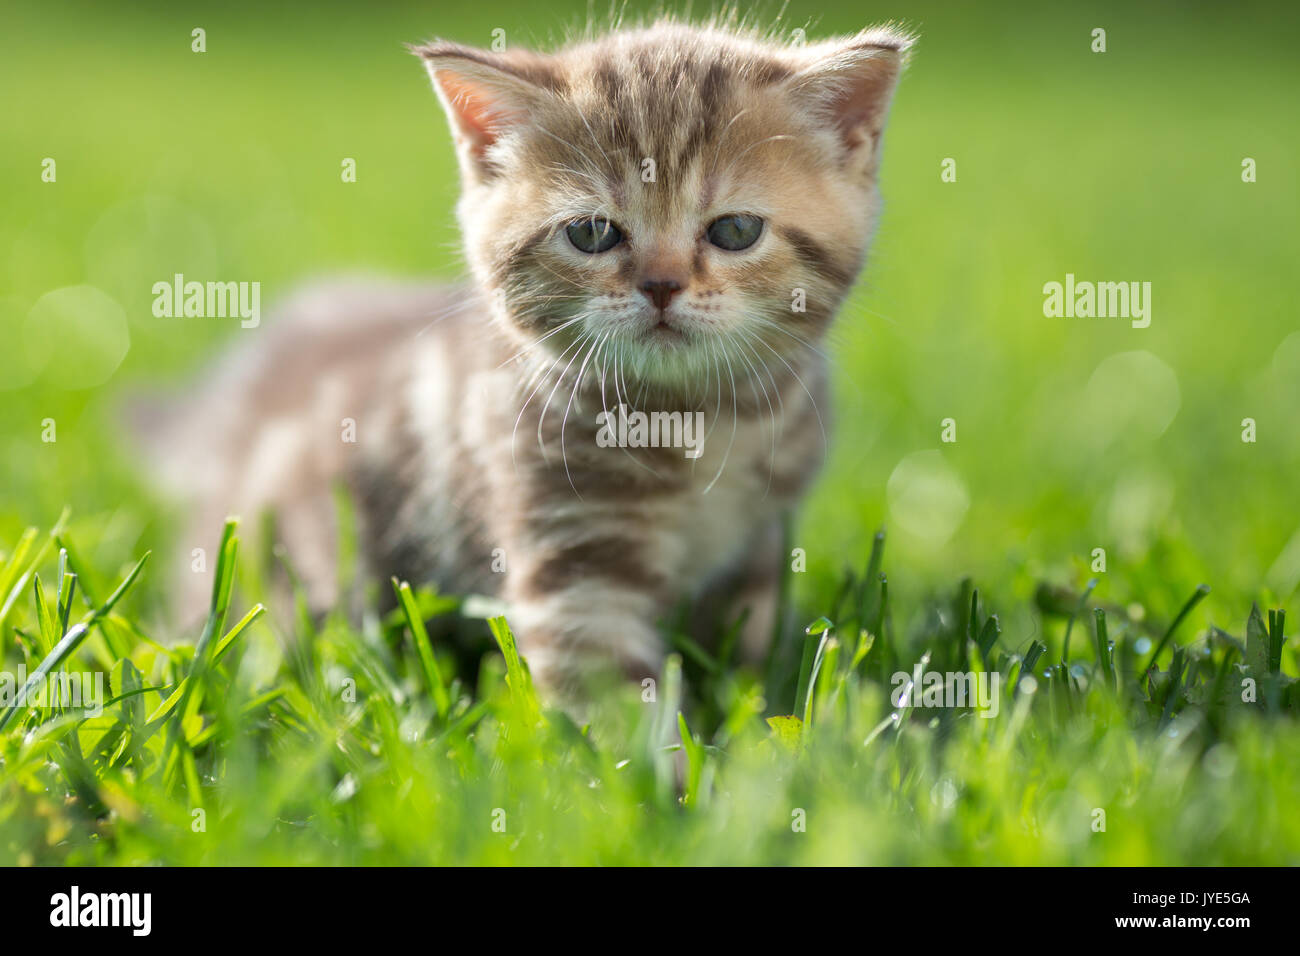 Little cat standing in green grass outdoor Stock Photo